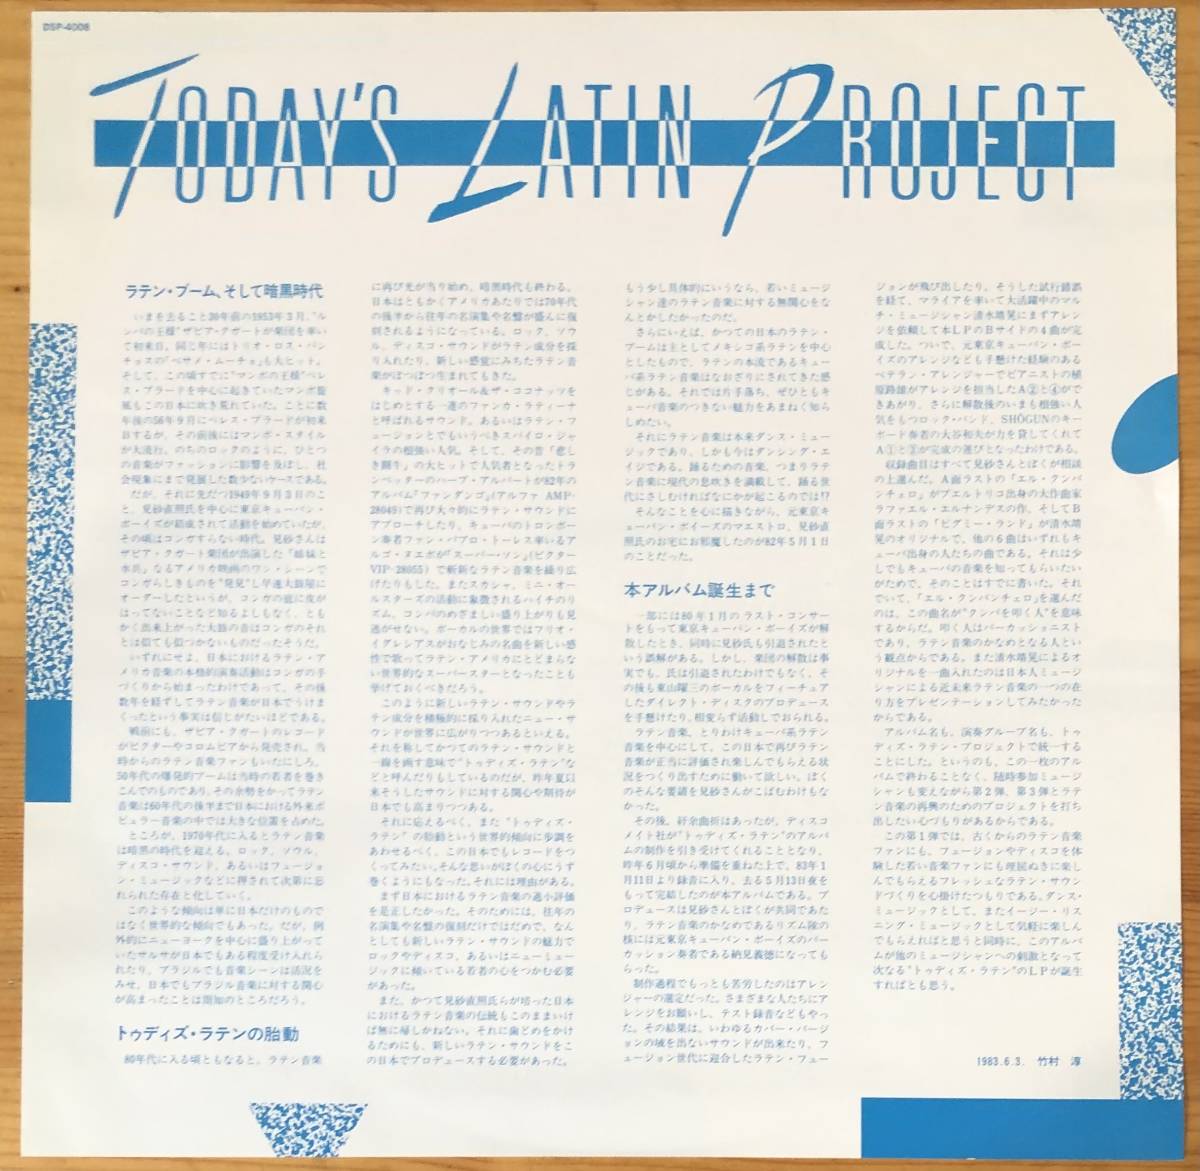  beautiful record sample record Today z* Latin * Project Todays Latin Project original record peace Jazz Shimizu .. direction .. spring LP record 